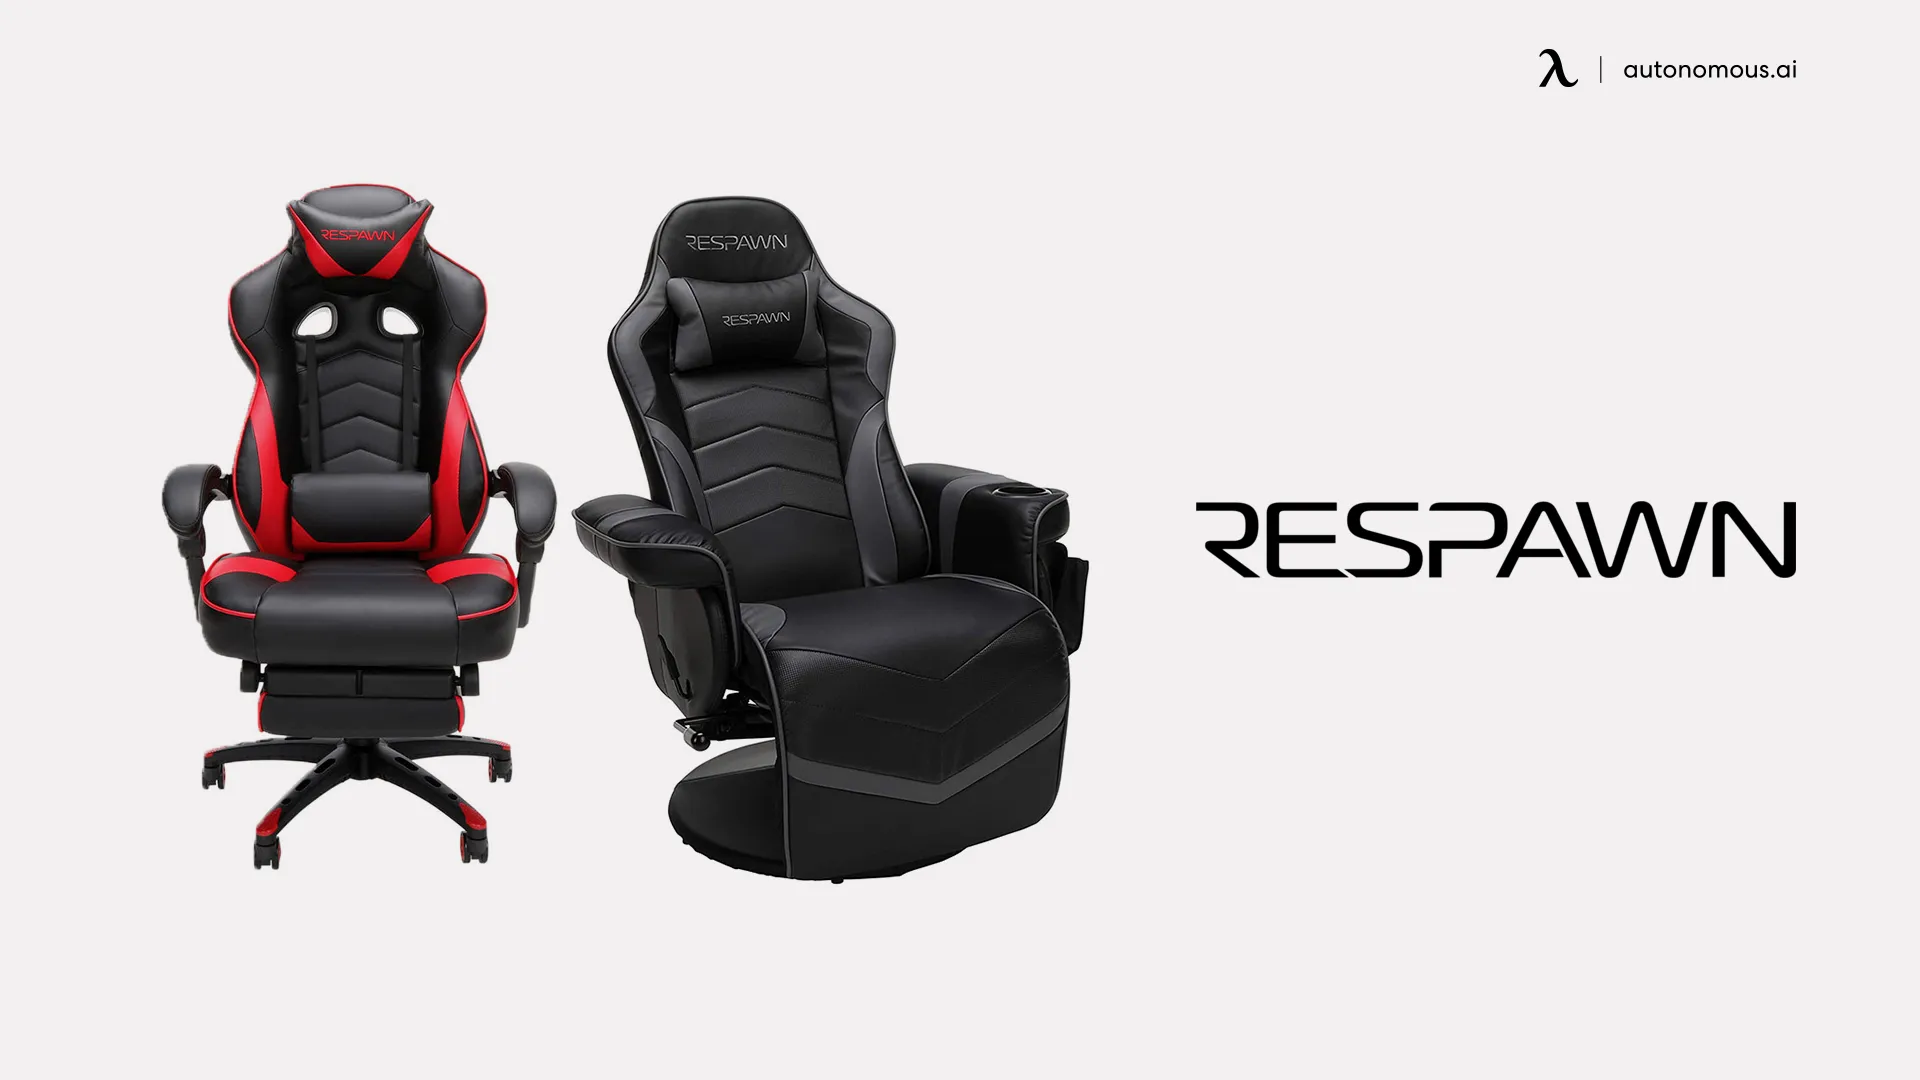 Respawn gaming chair brand